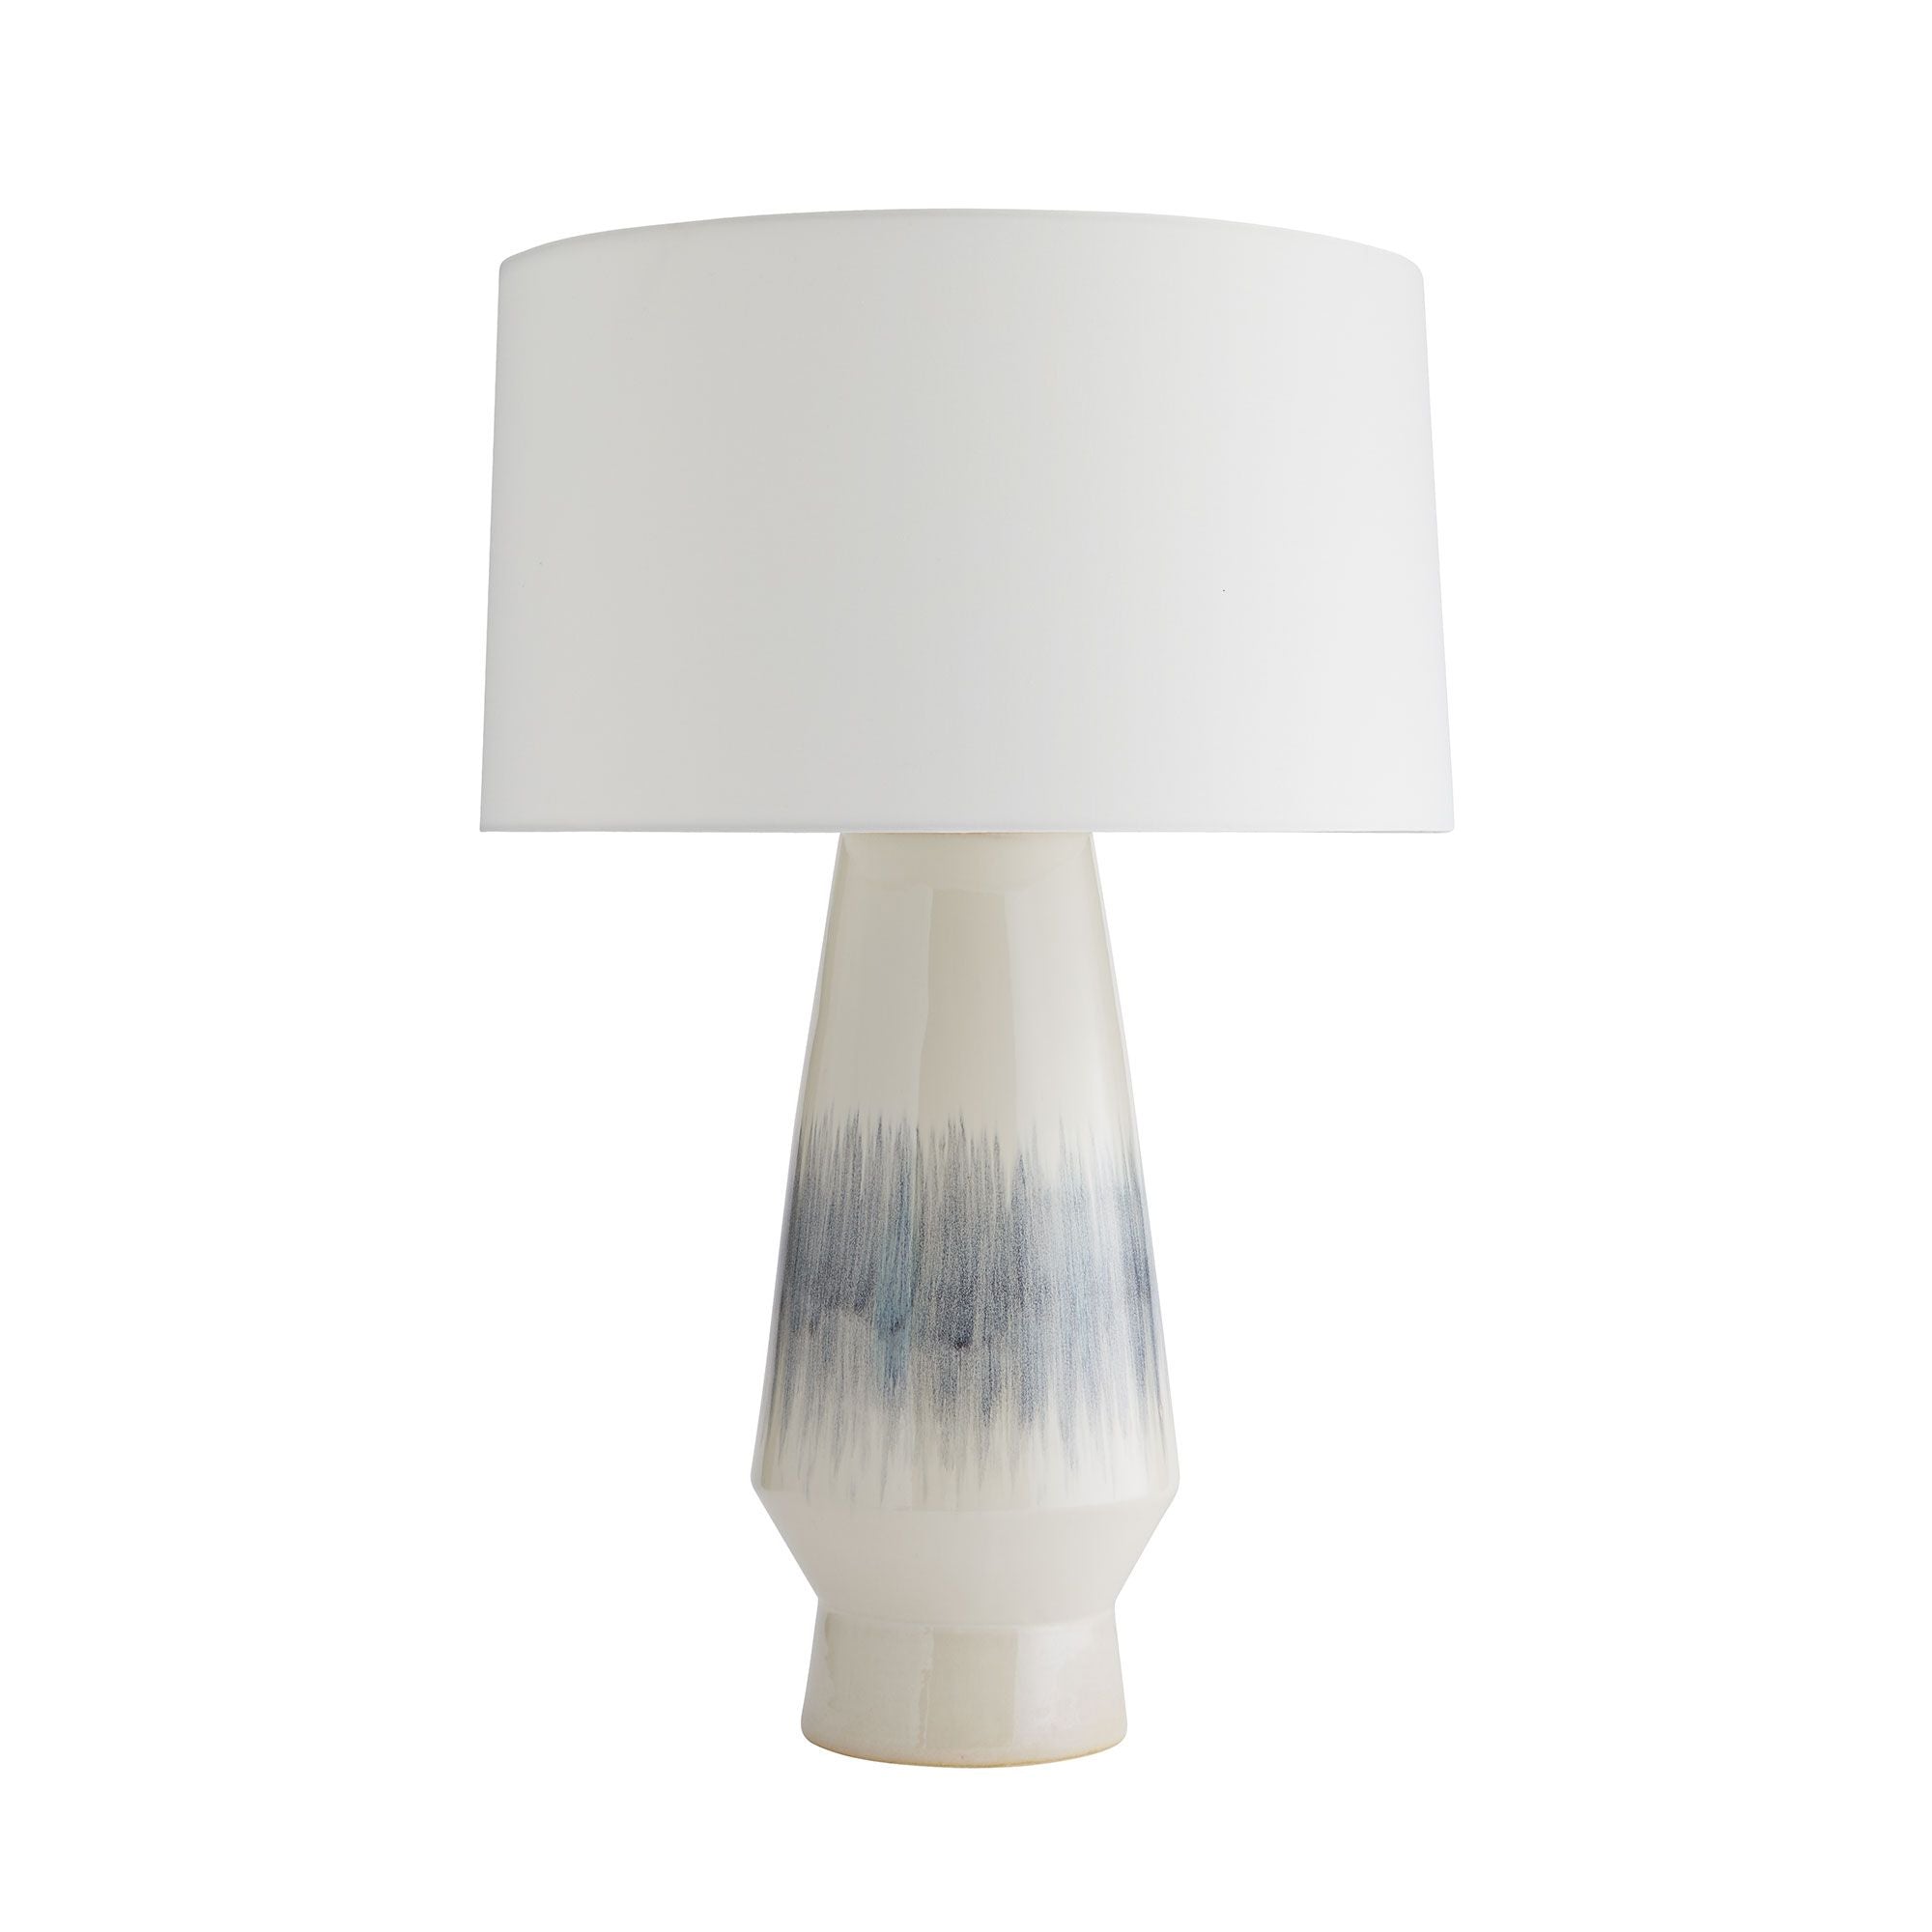 Howlan Table lamp - 17840-894 | ARTERIORS